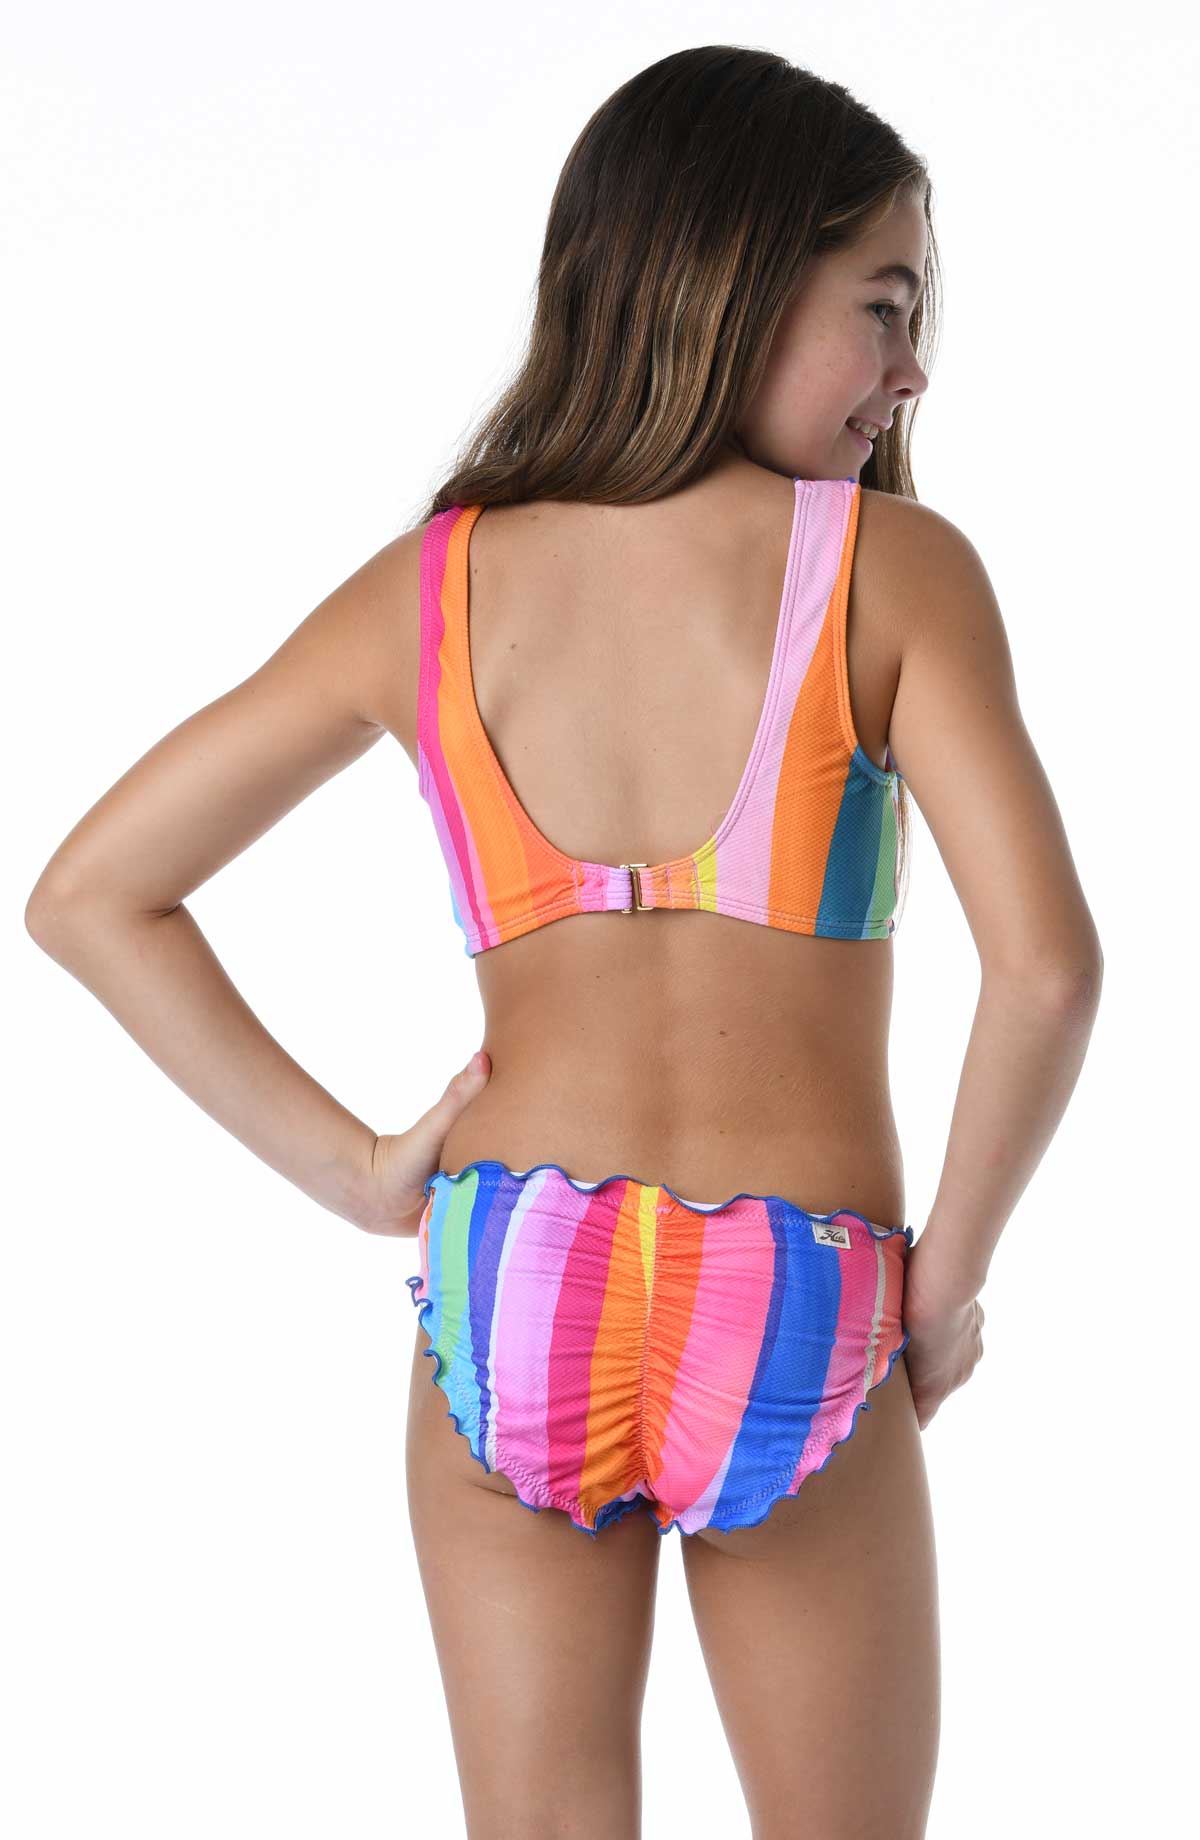 Hobie Girls: Riding Waves Bralette Bikini Set – Swim City